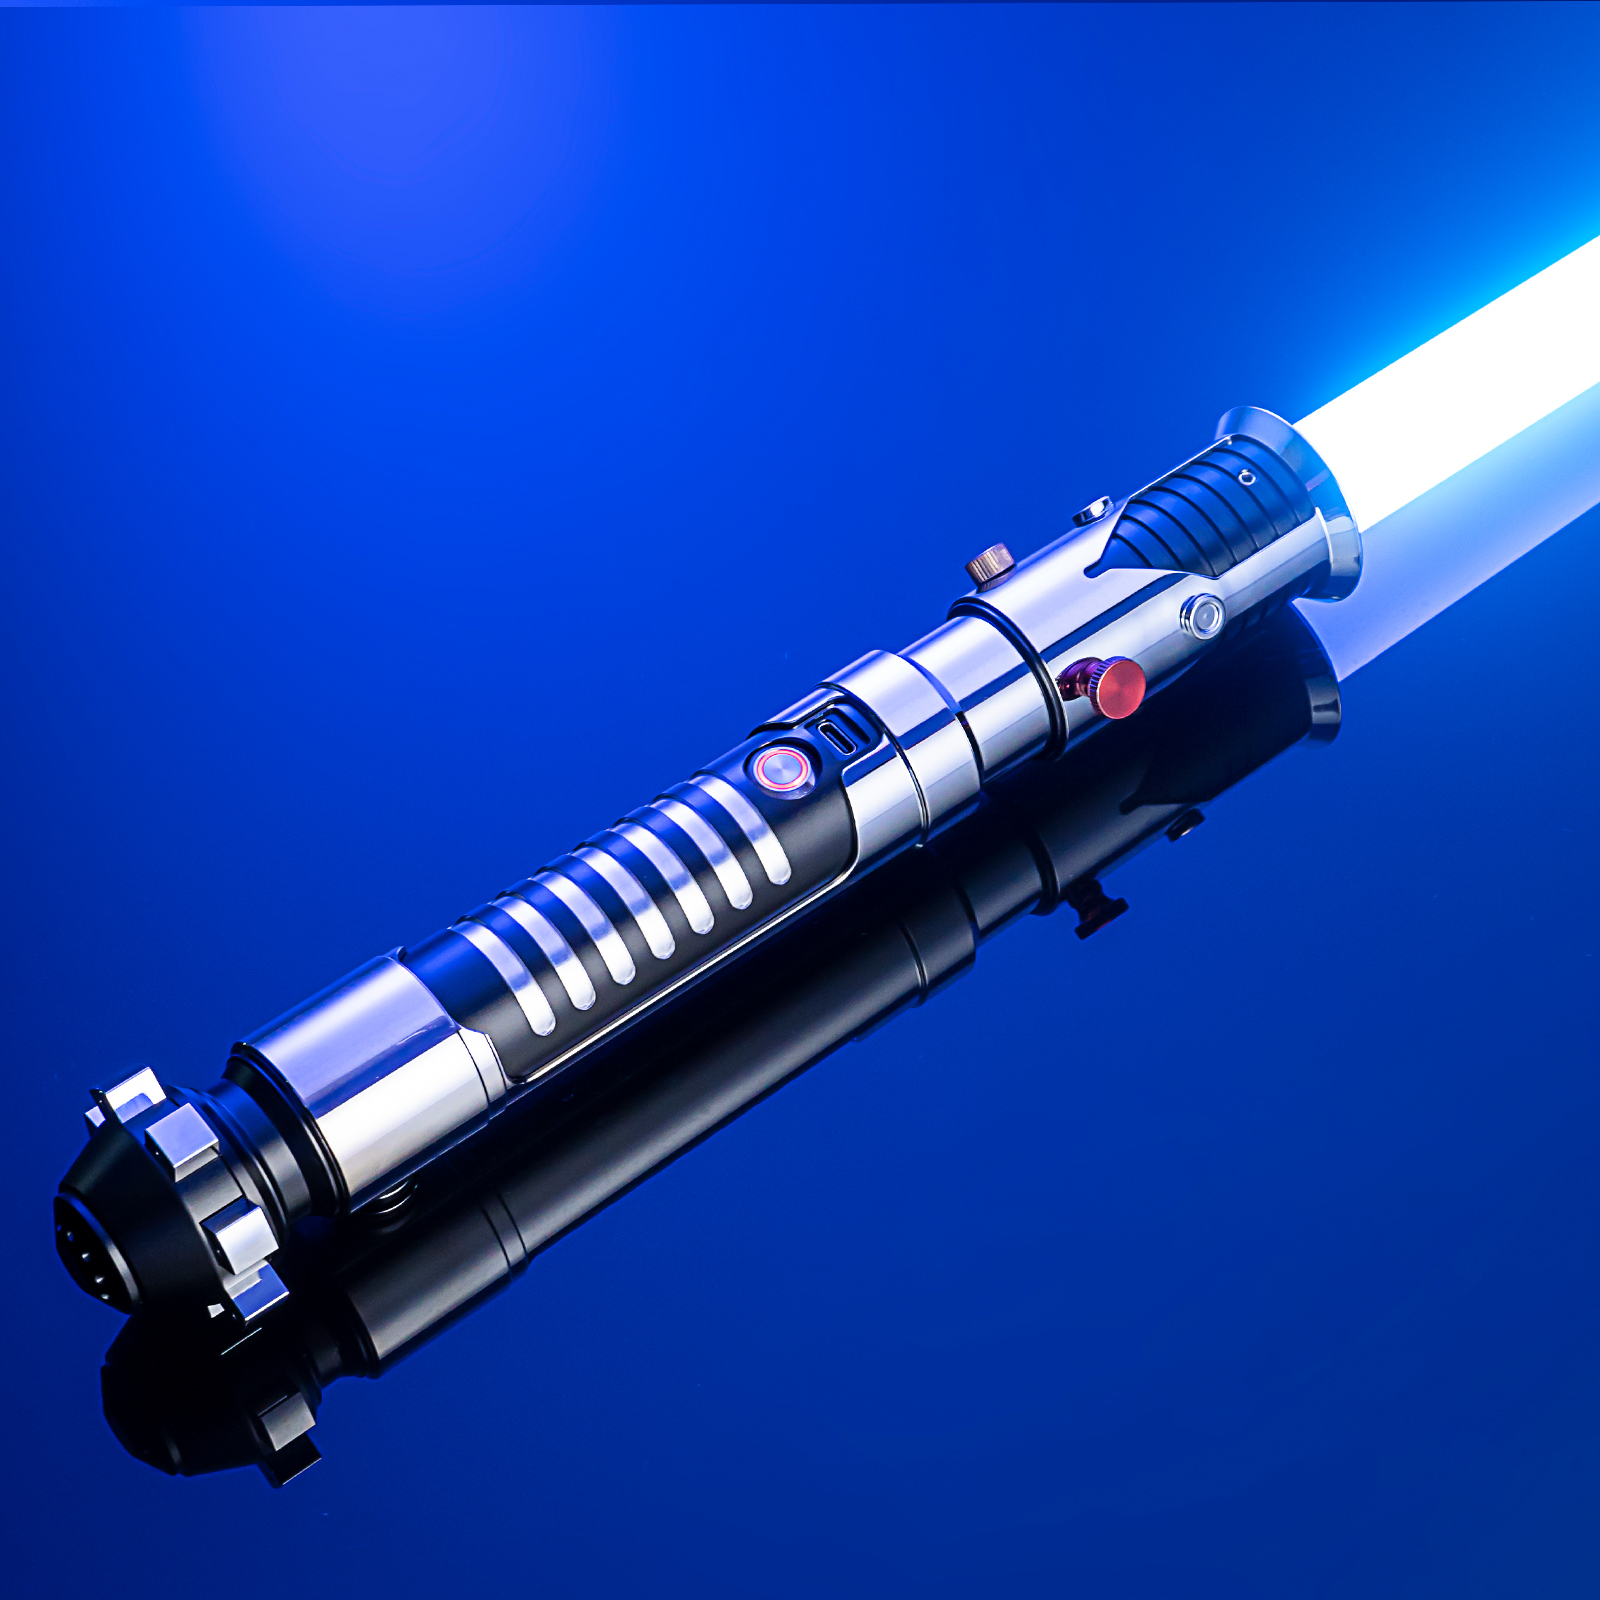 Original Republic Kenobi neopixel lightsaber